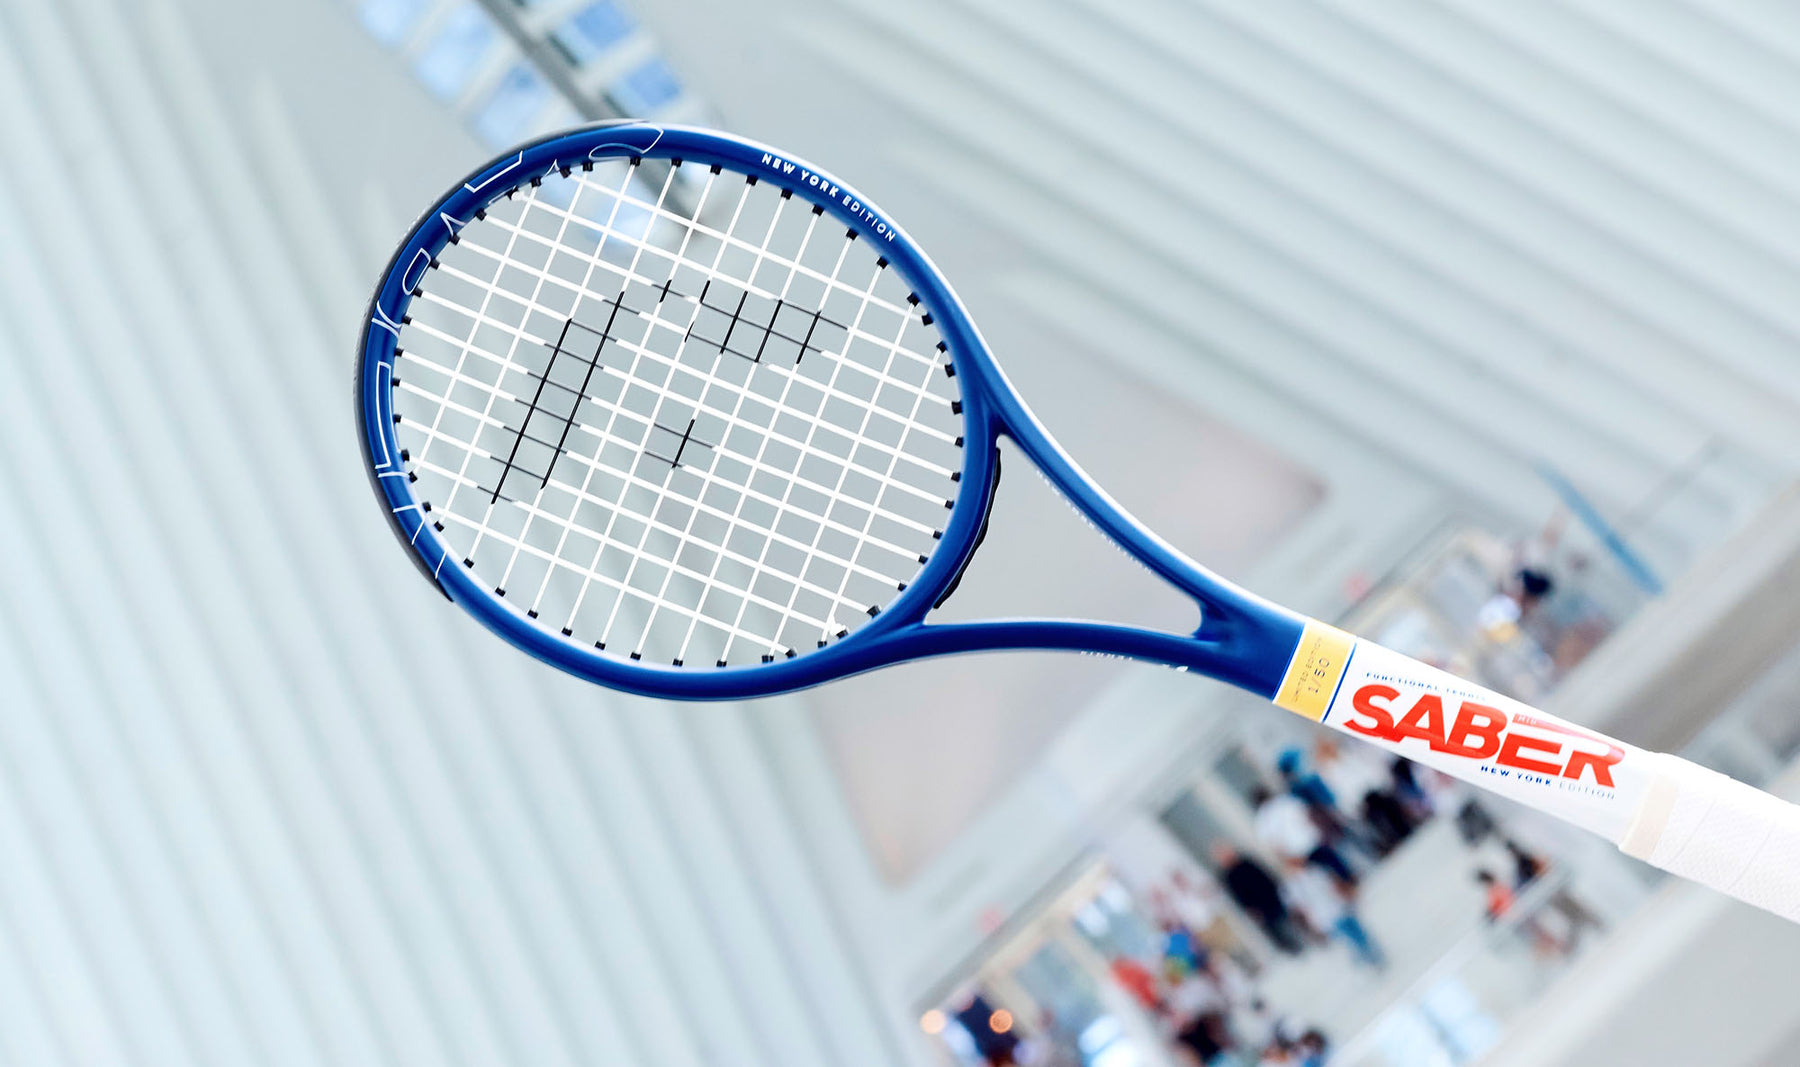 Saber - New York Edition – Functional Tennis